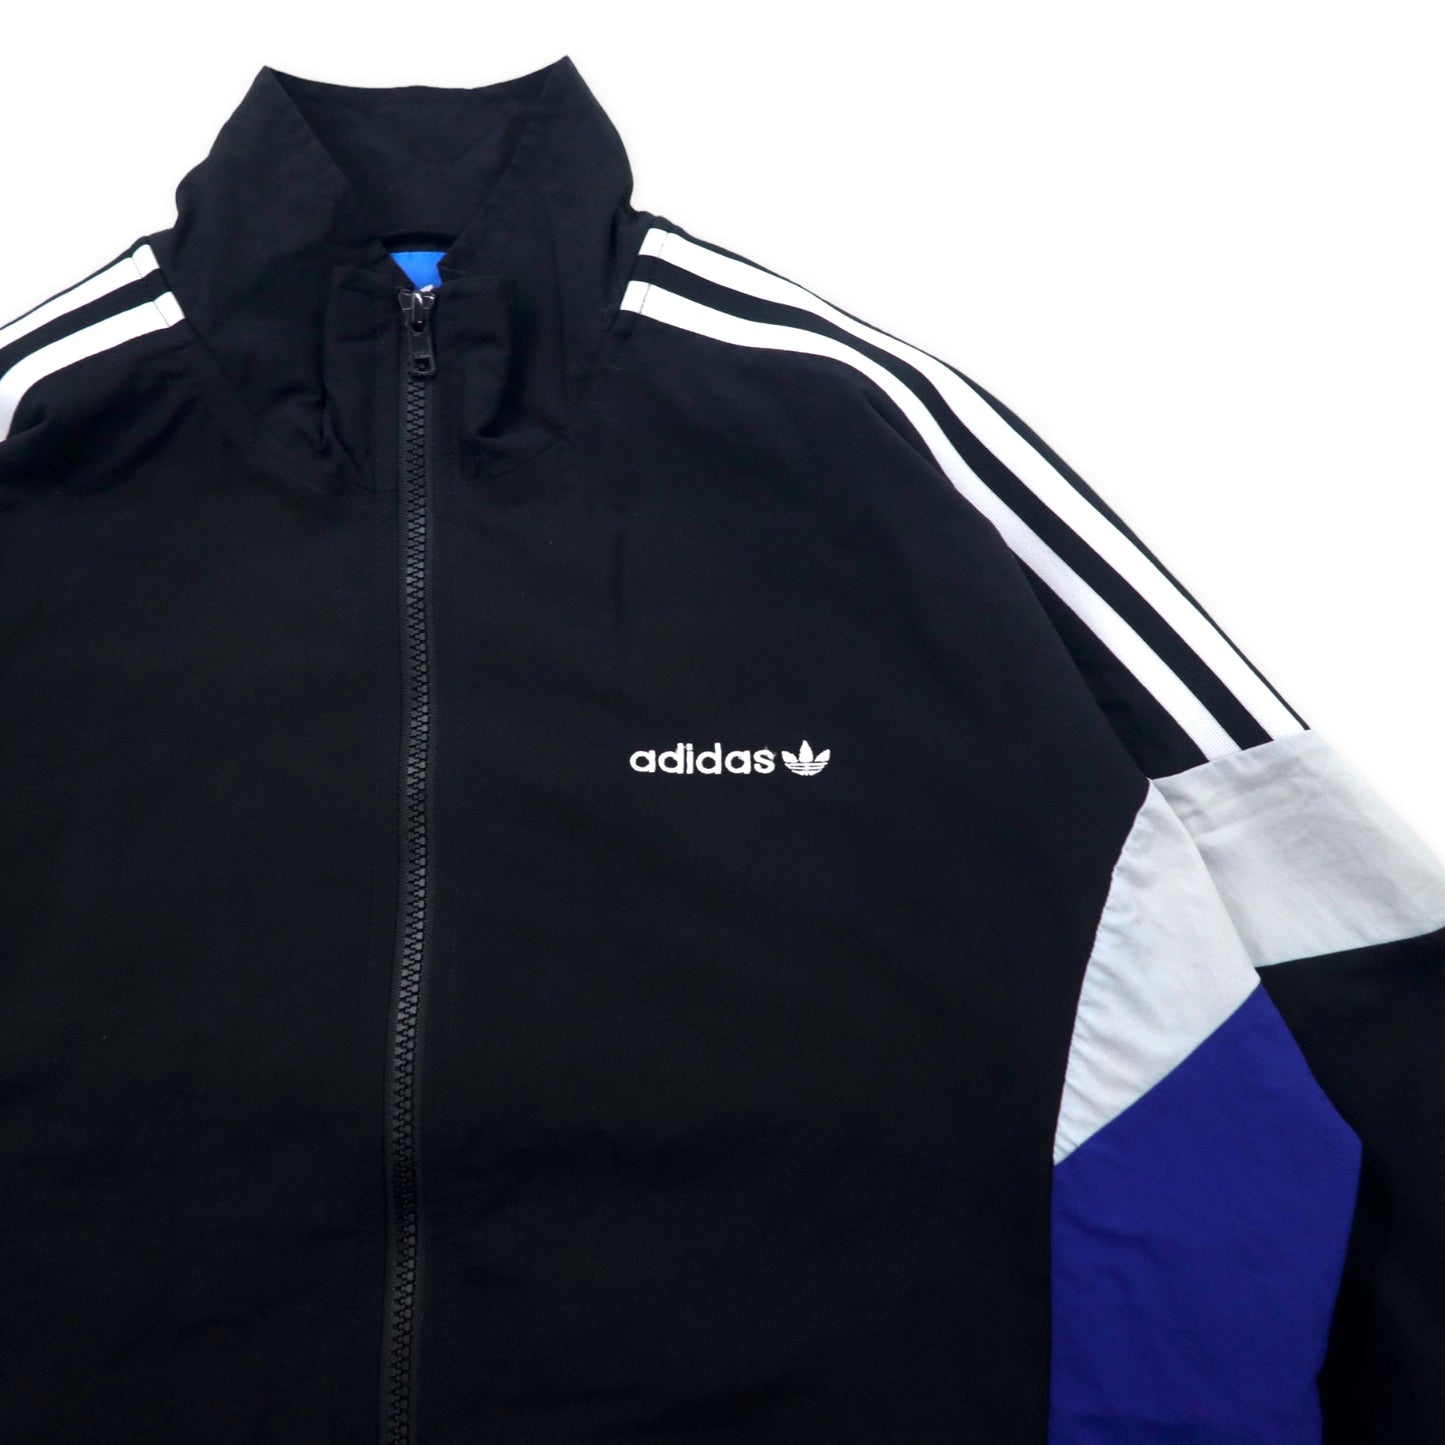 Adidas Originals Track Jacket Jersey XL Black Nylon 3 STRIPED